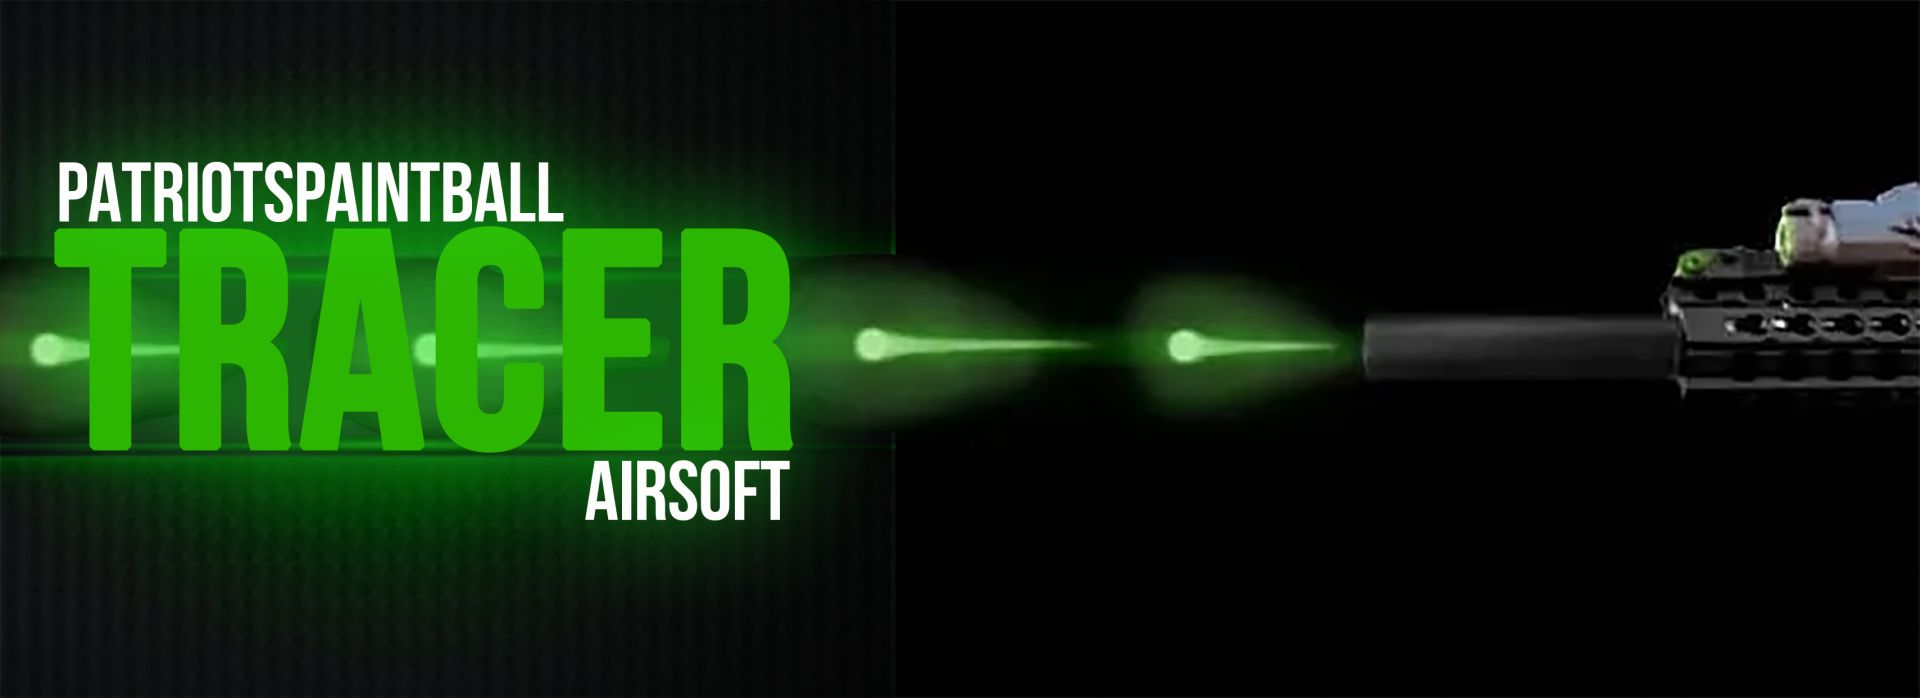 Tracer Airsoft Budapesten